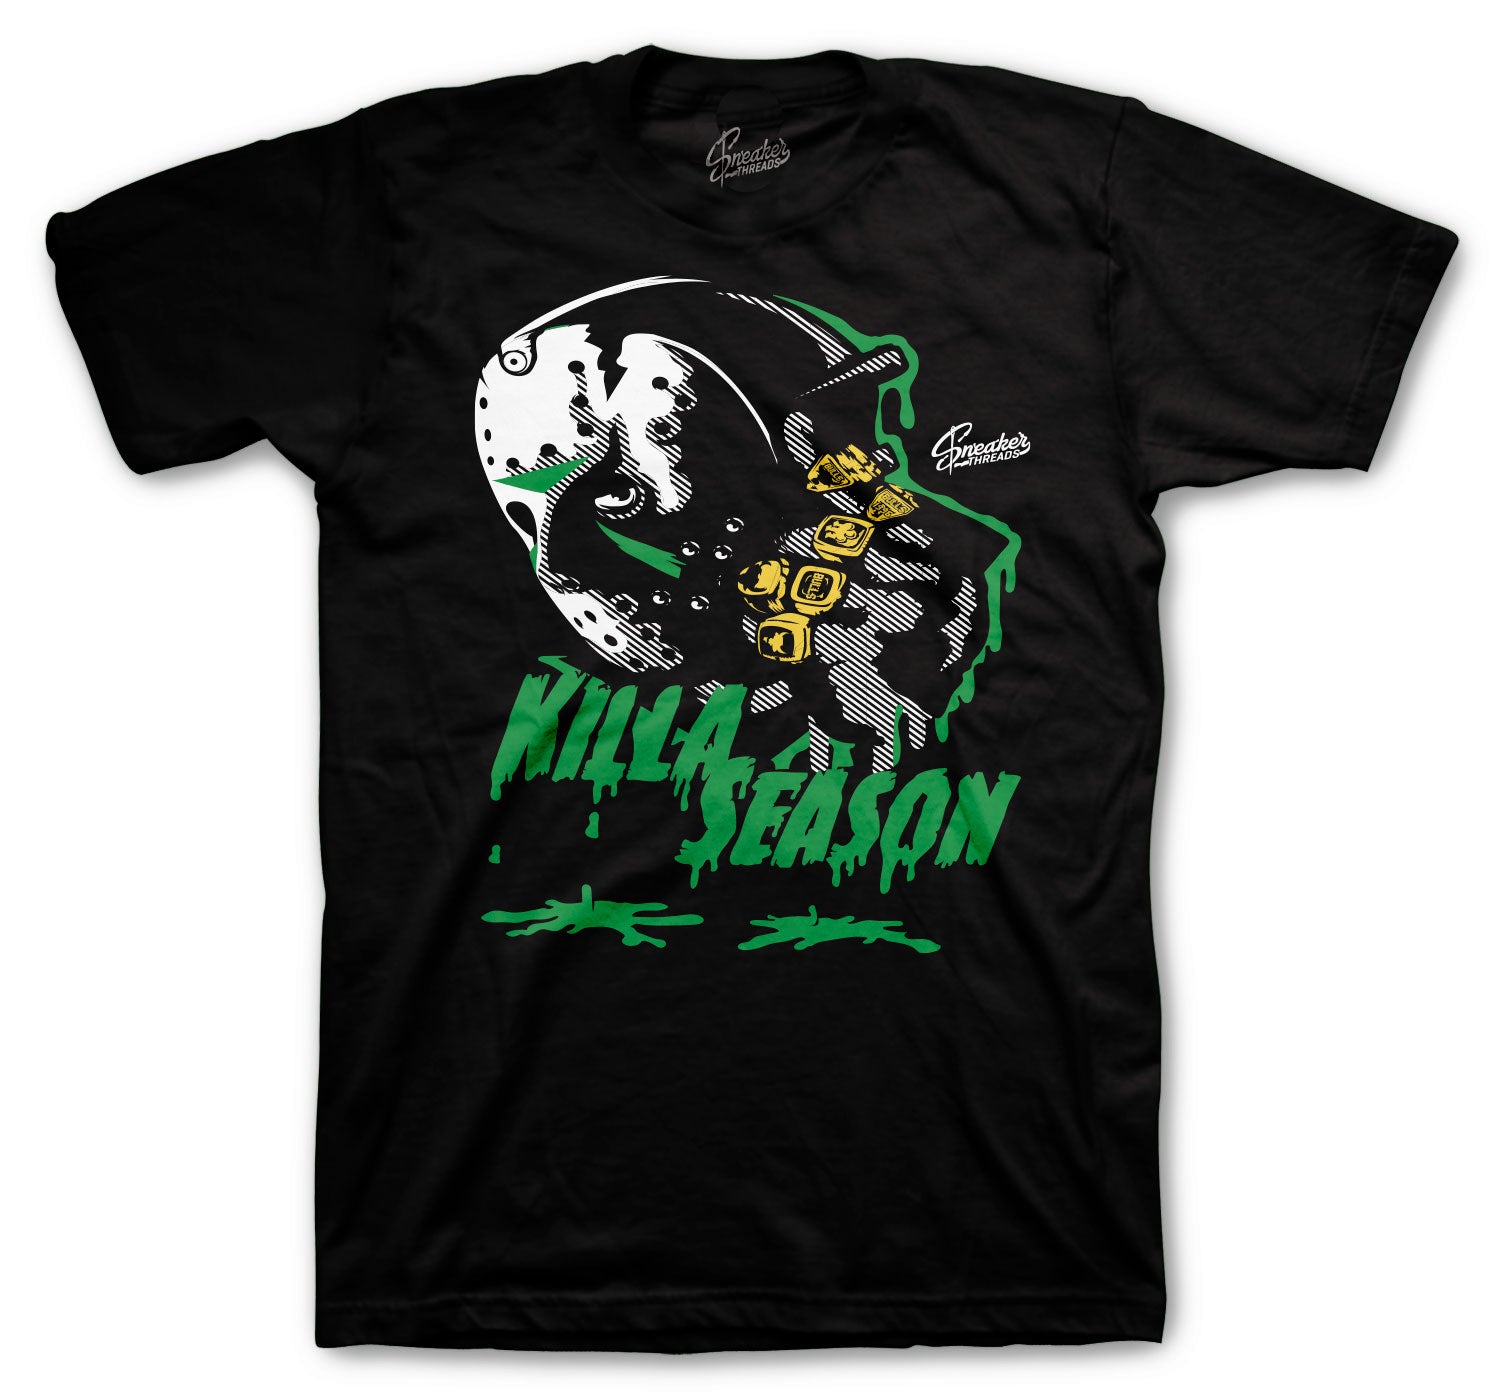 Retro 3 Pine Green Shirt - Killa Season - Black